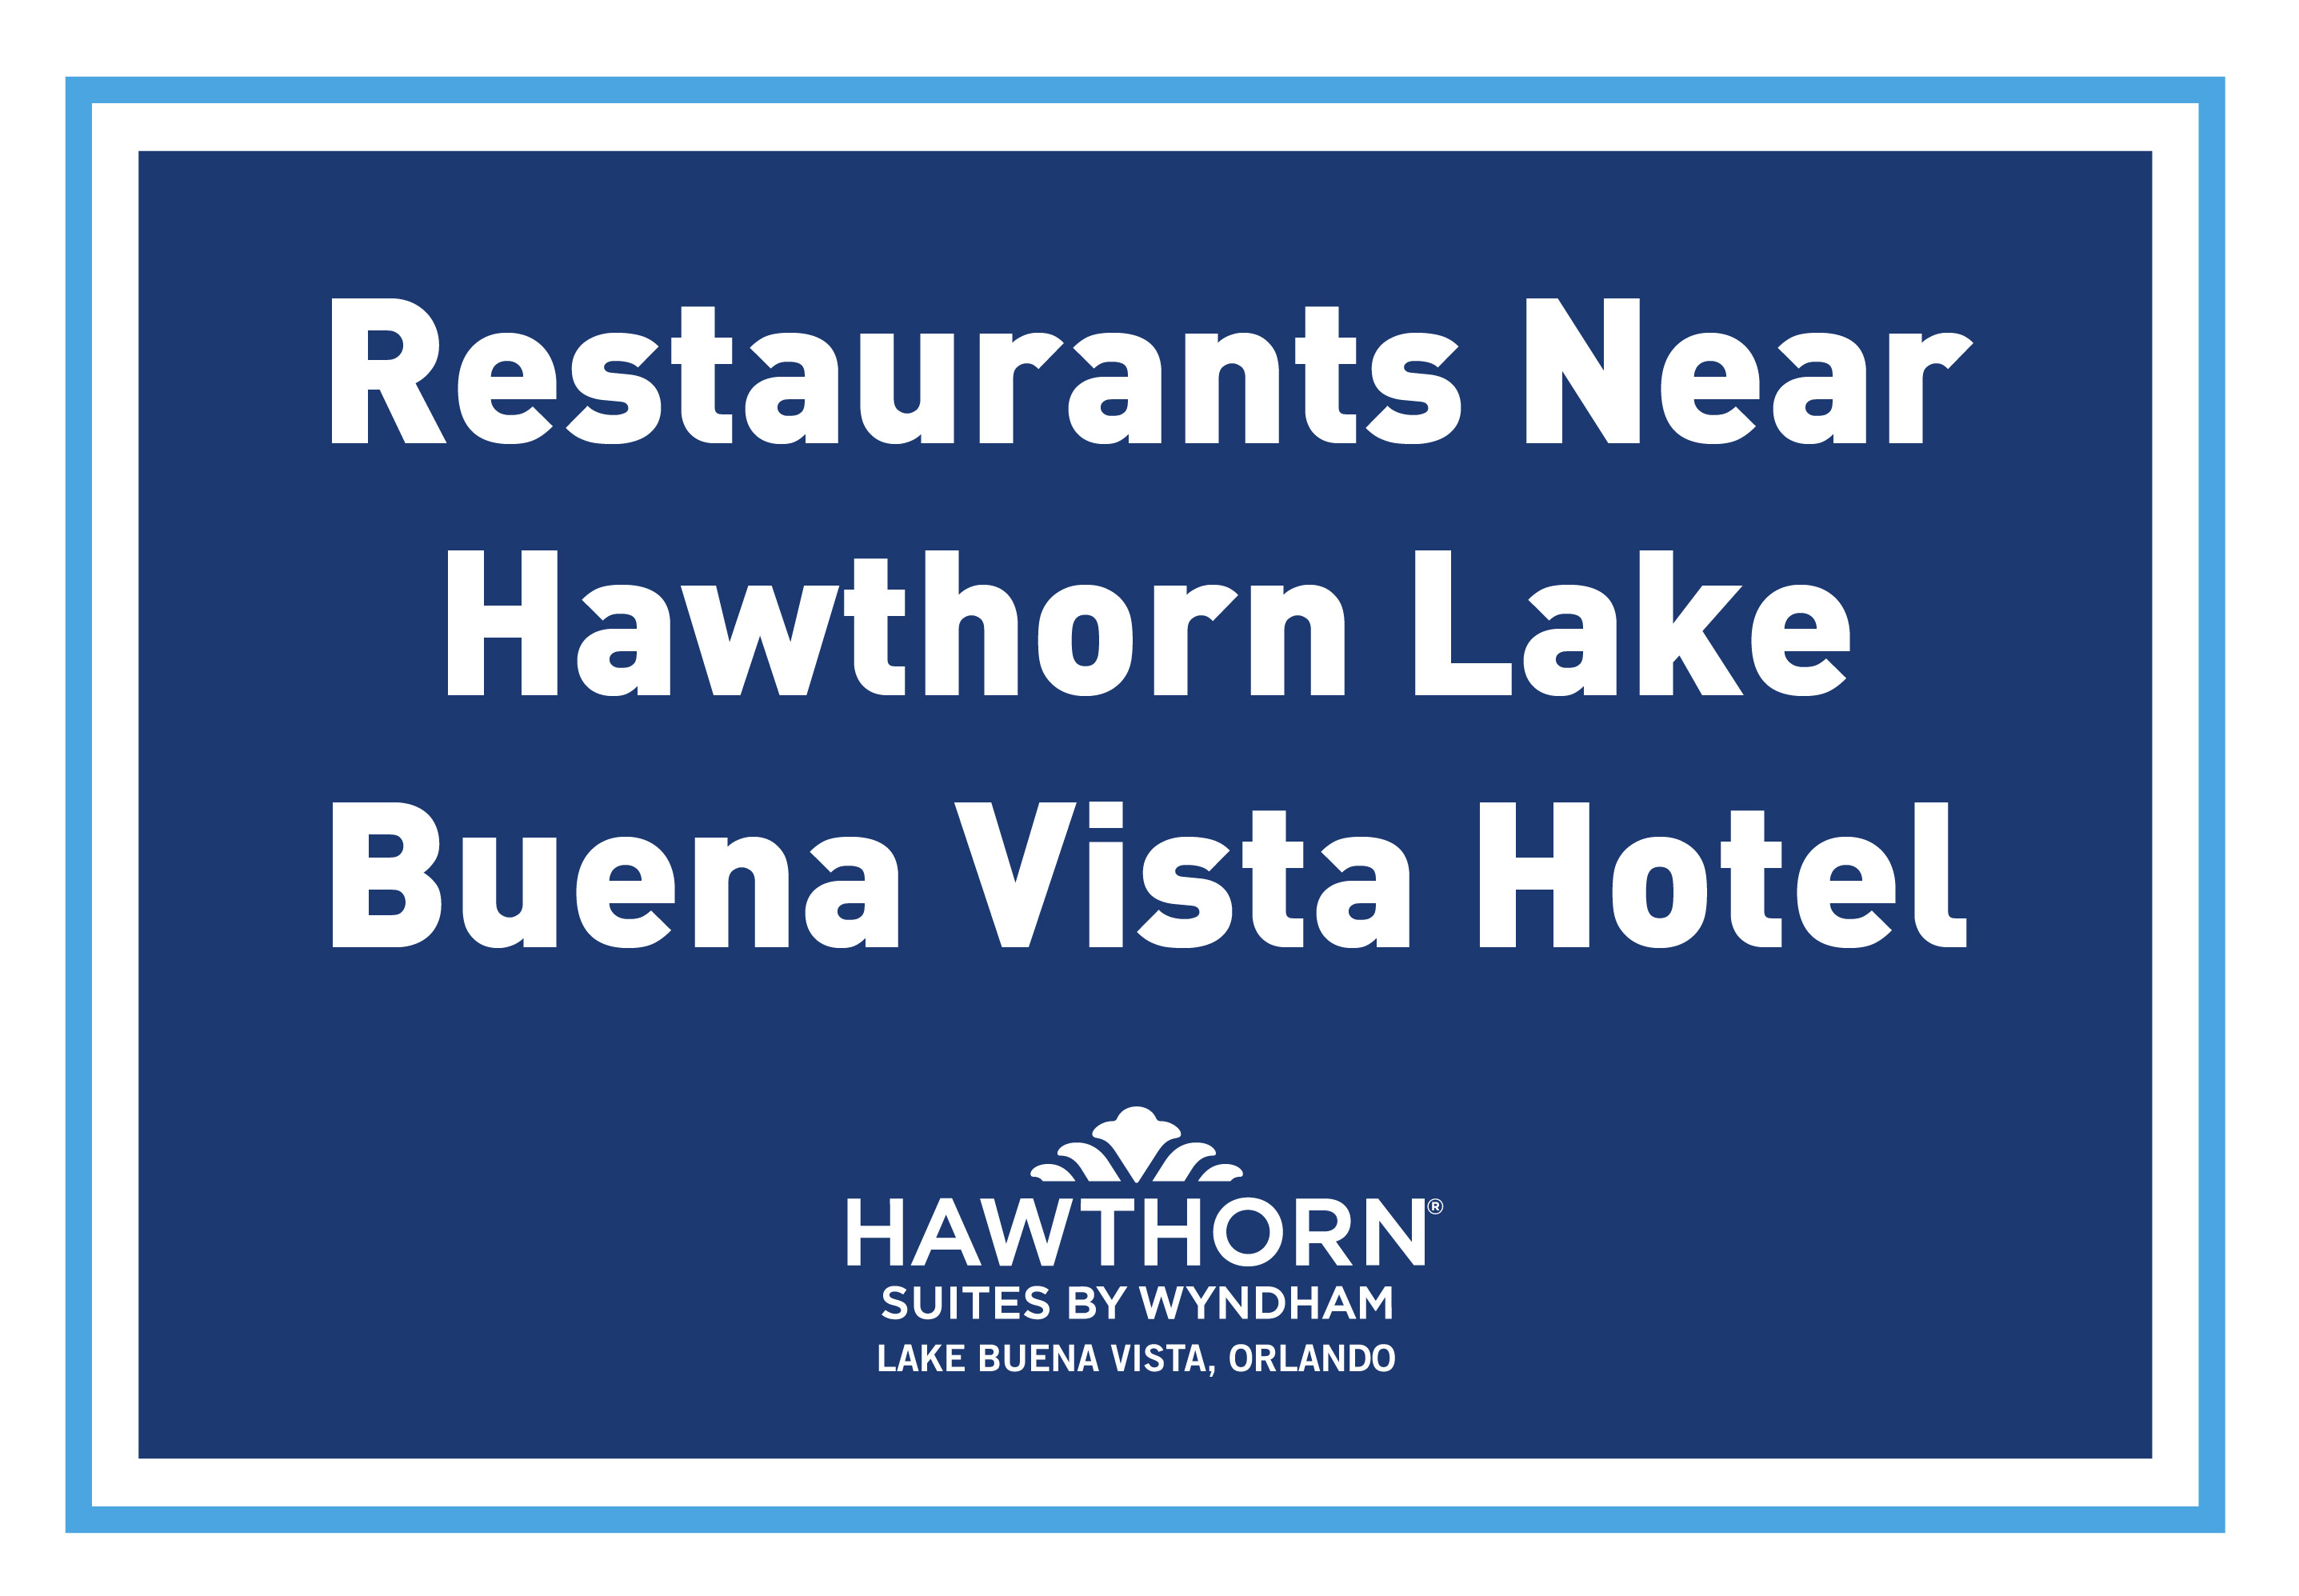 Restaurants Near Hawthorn Lbv Hotel Hawthorn Suites Lake Buena Vista Orlando Hotel Suites